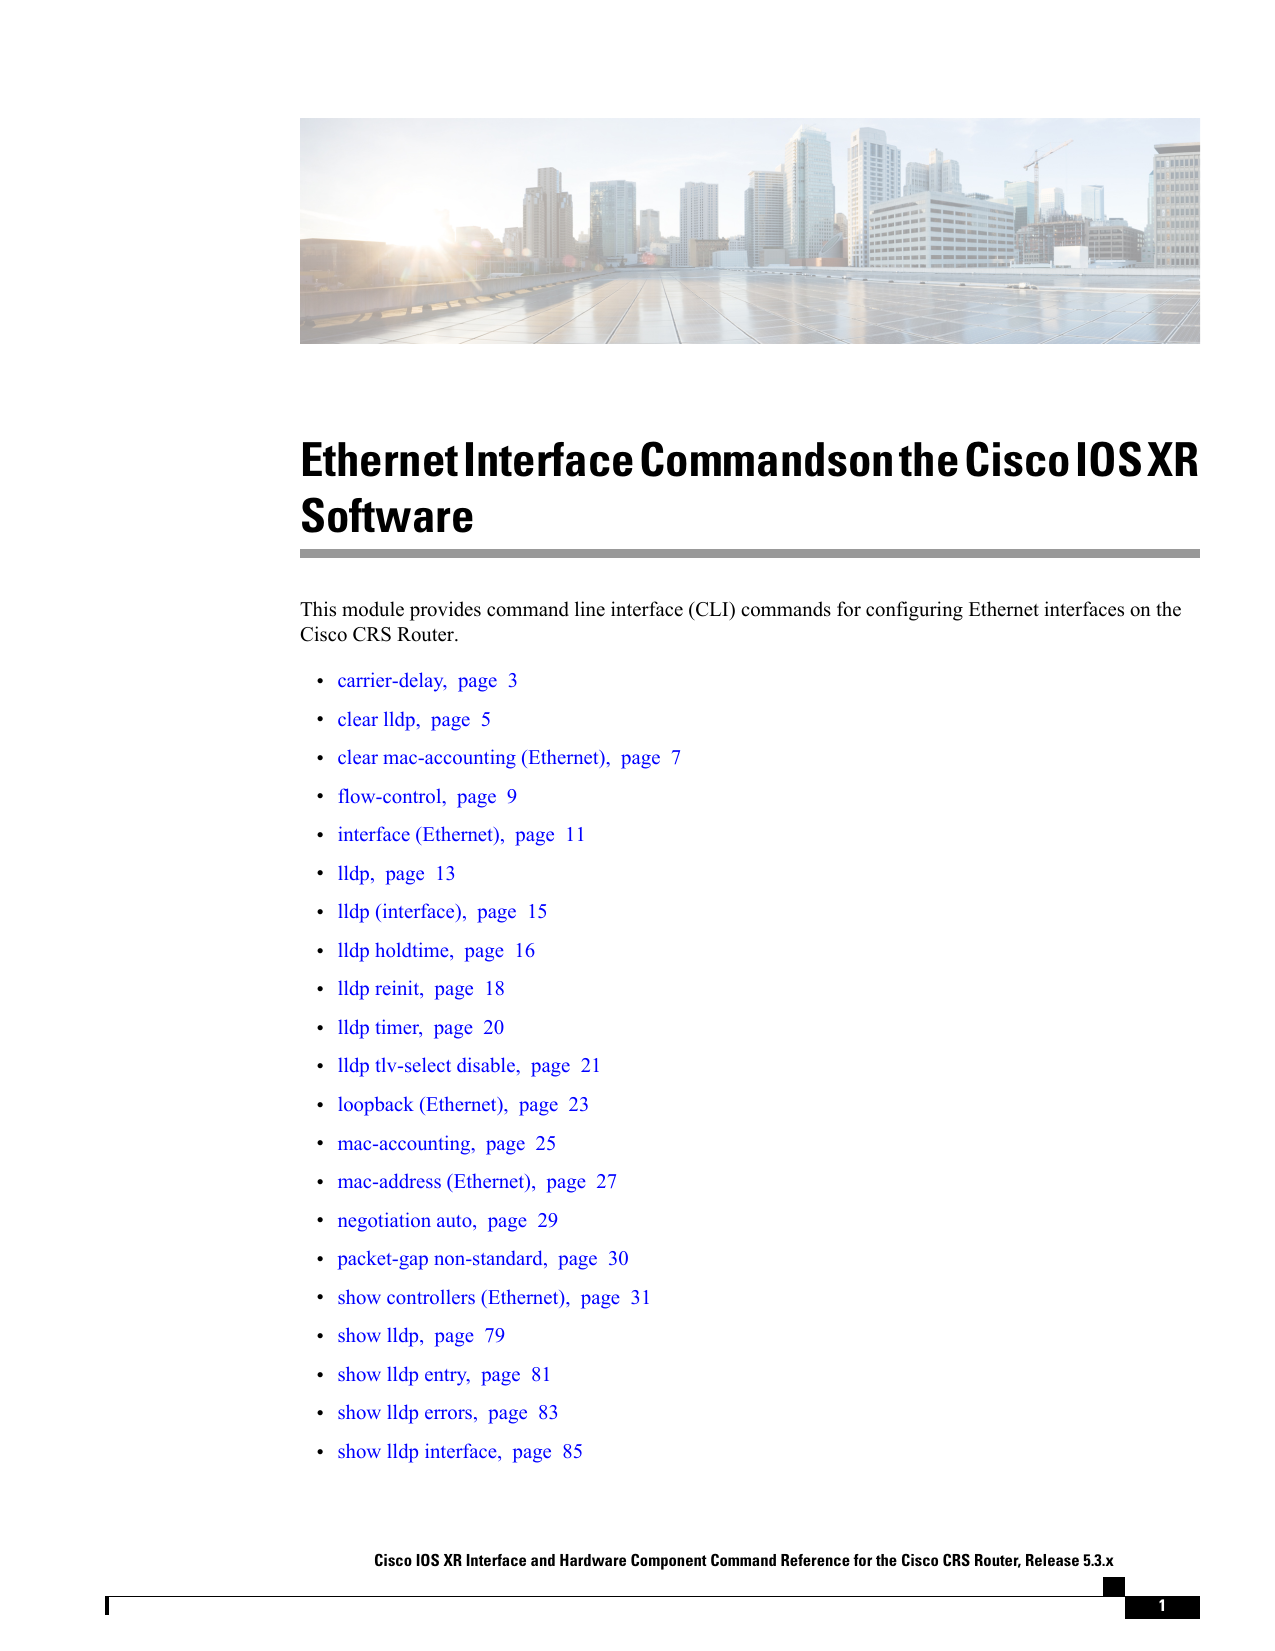 cisco ios software command line interface